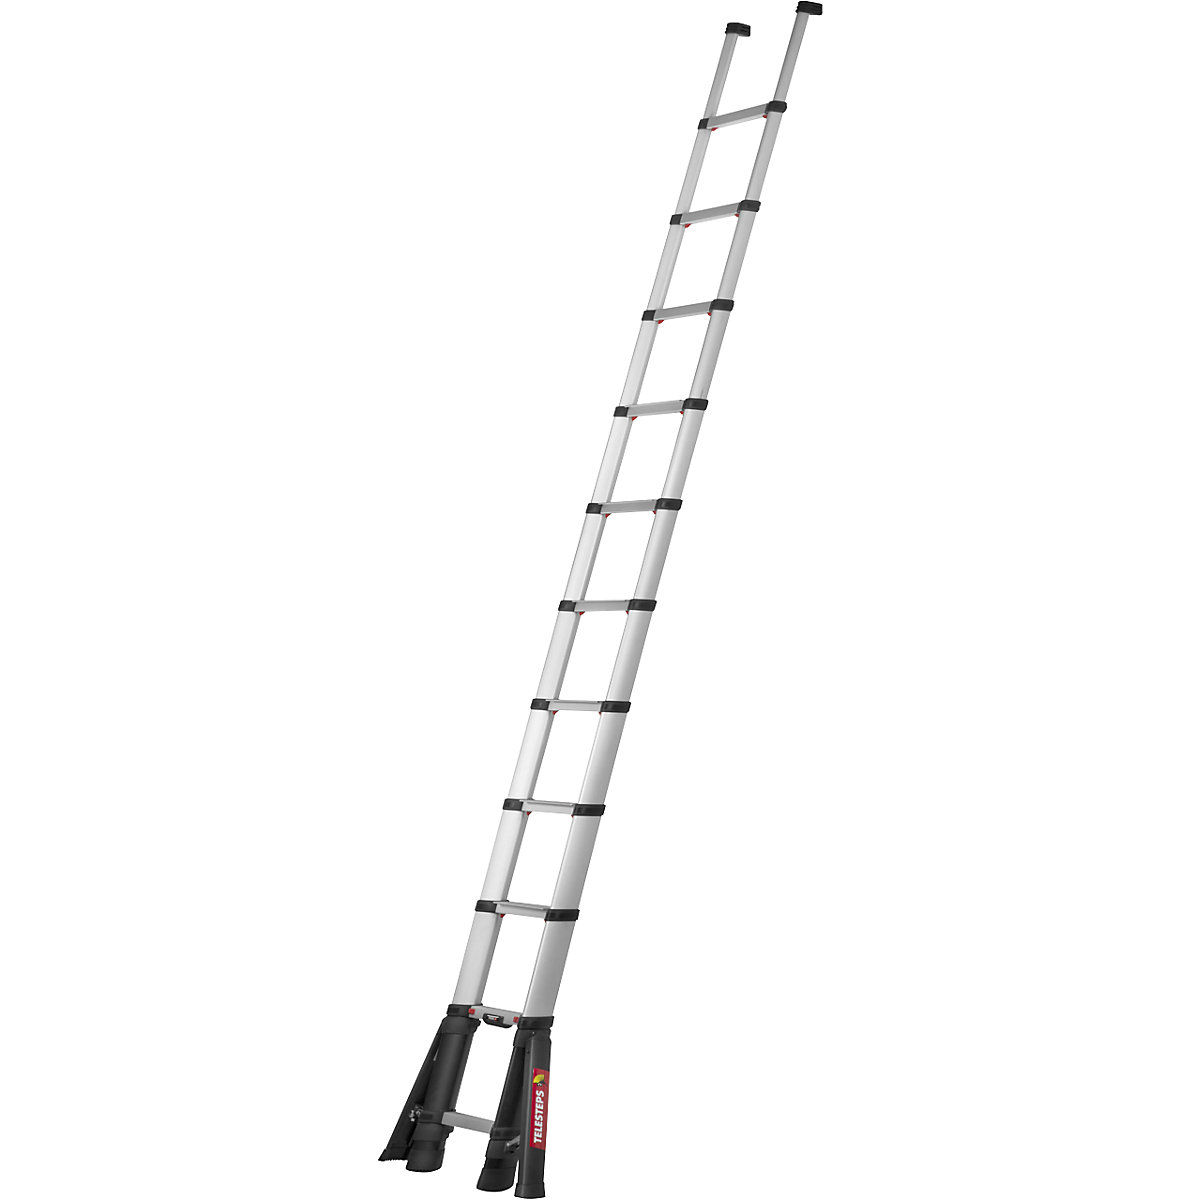 PRIME LINE telescopic lean-to ladder – Telesteps